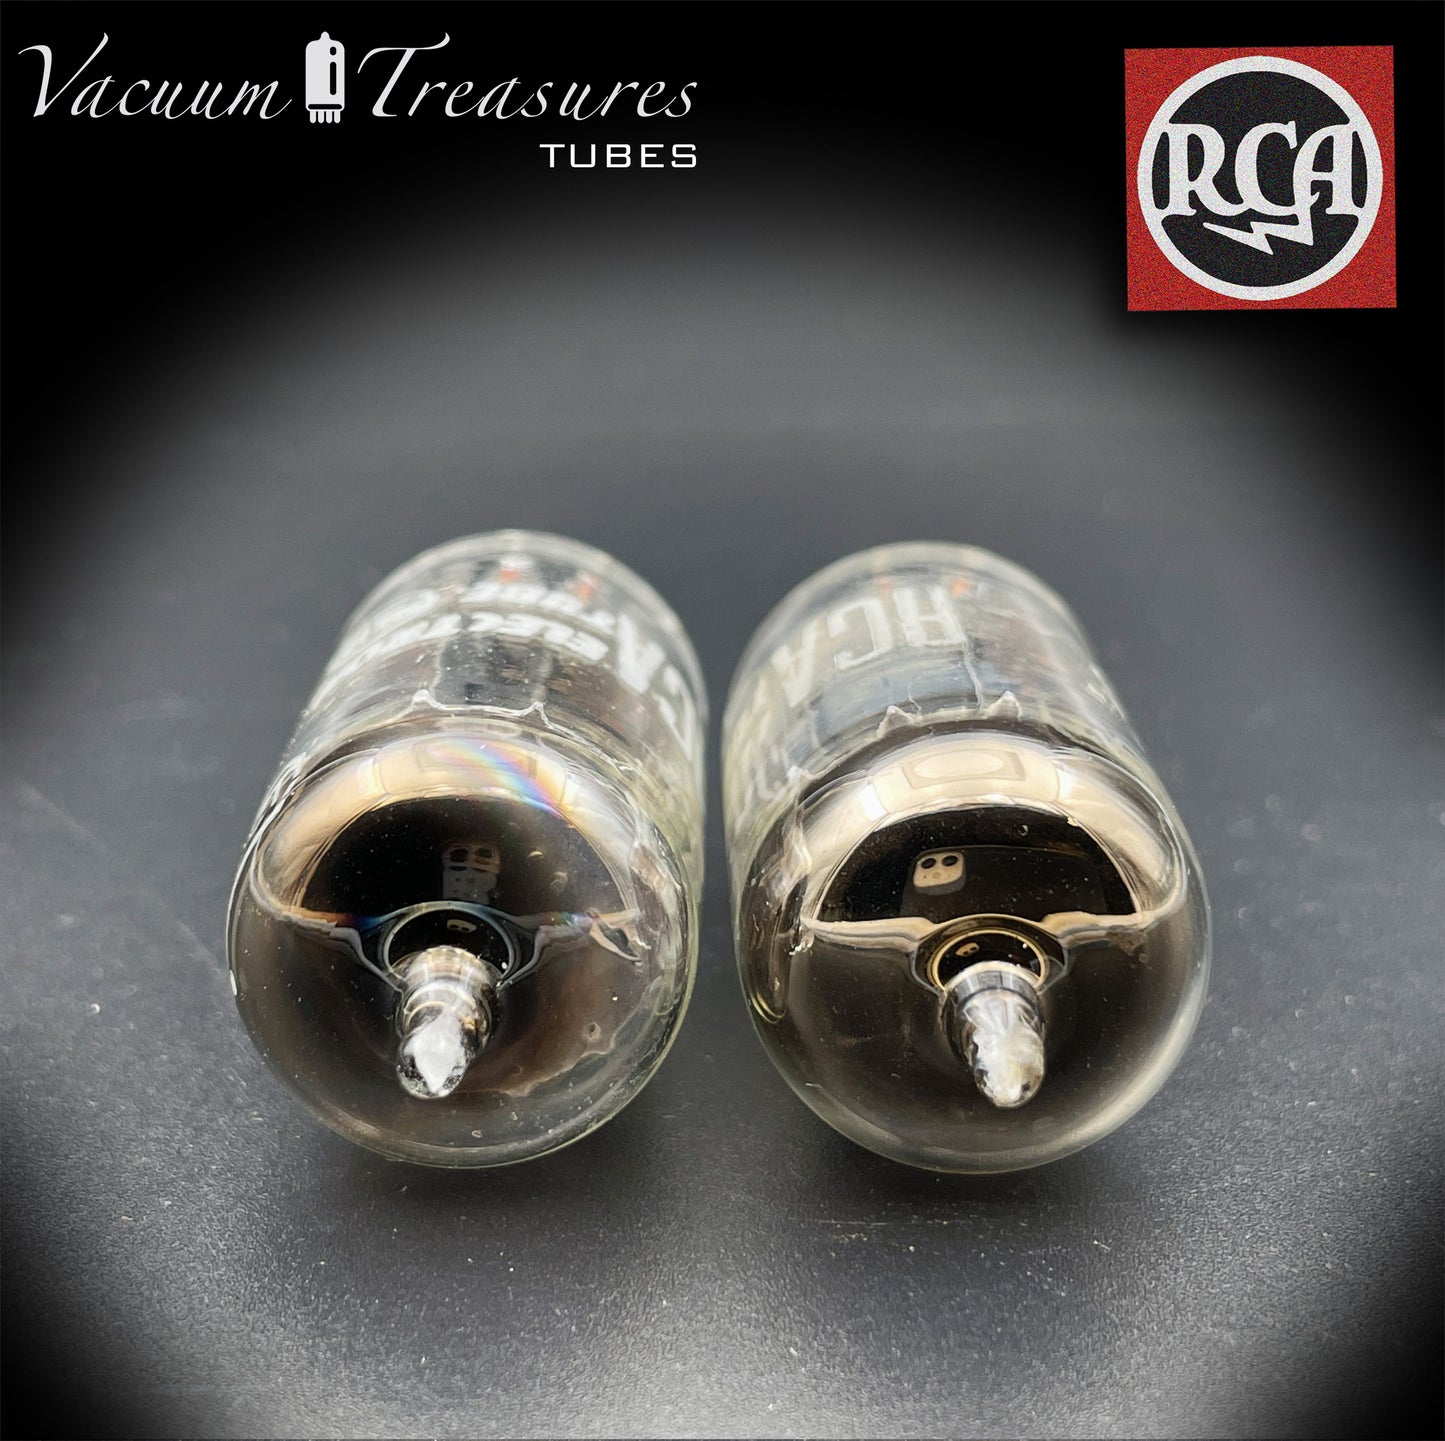 12AX7 (ECC83) RCA NOS lange schwarze Platten [gekippte Getter-angepasste Röhren] HERGESTELLT IN den 50er Jahren in den USA